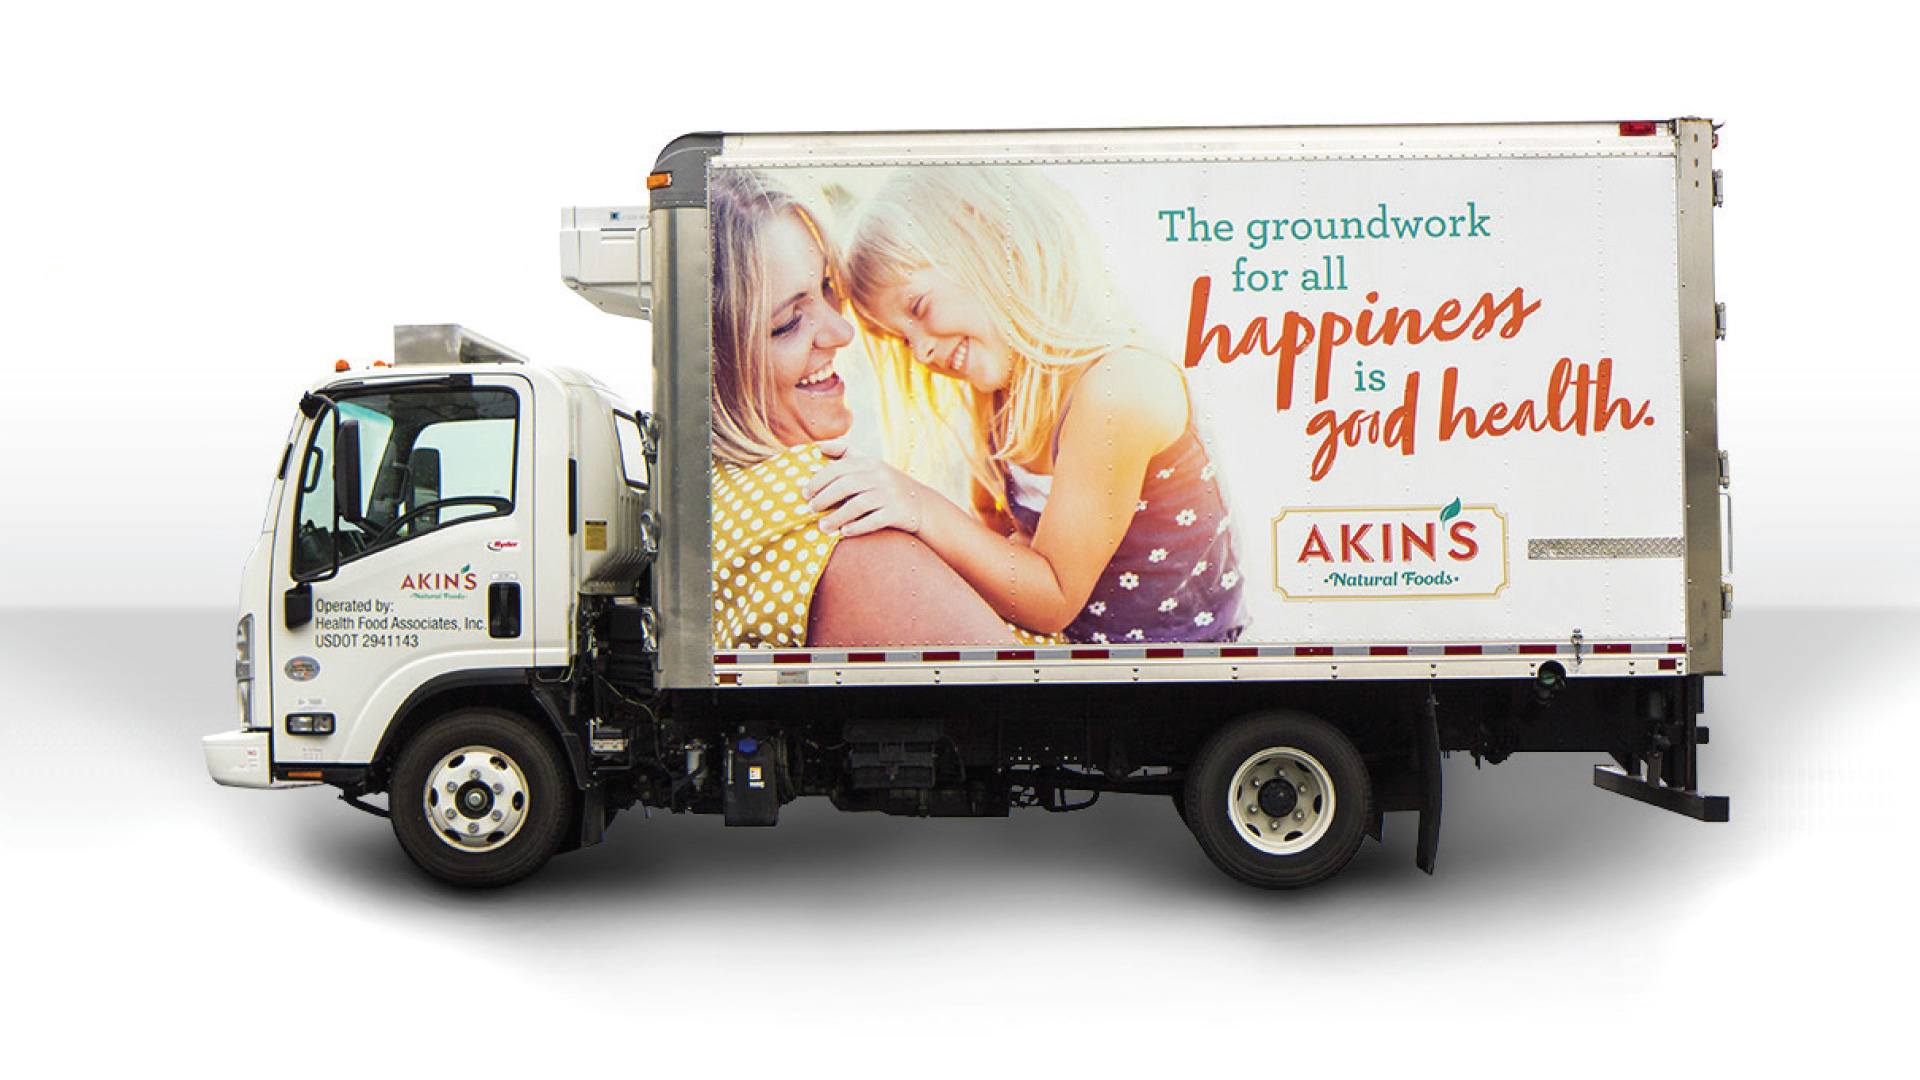 Akin's Natural Foods truck